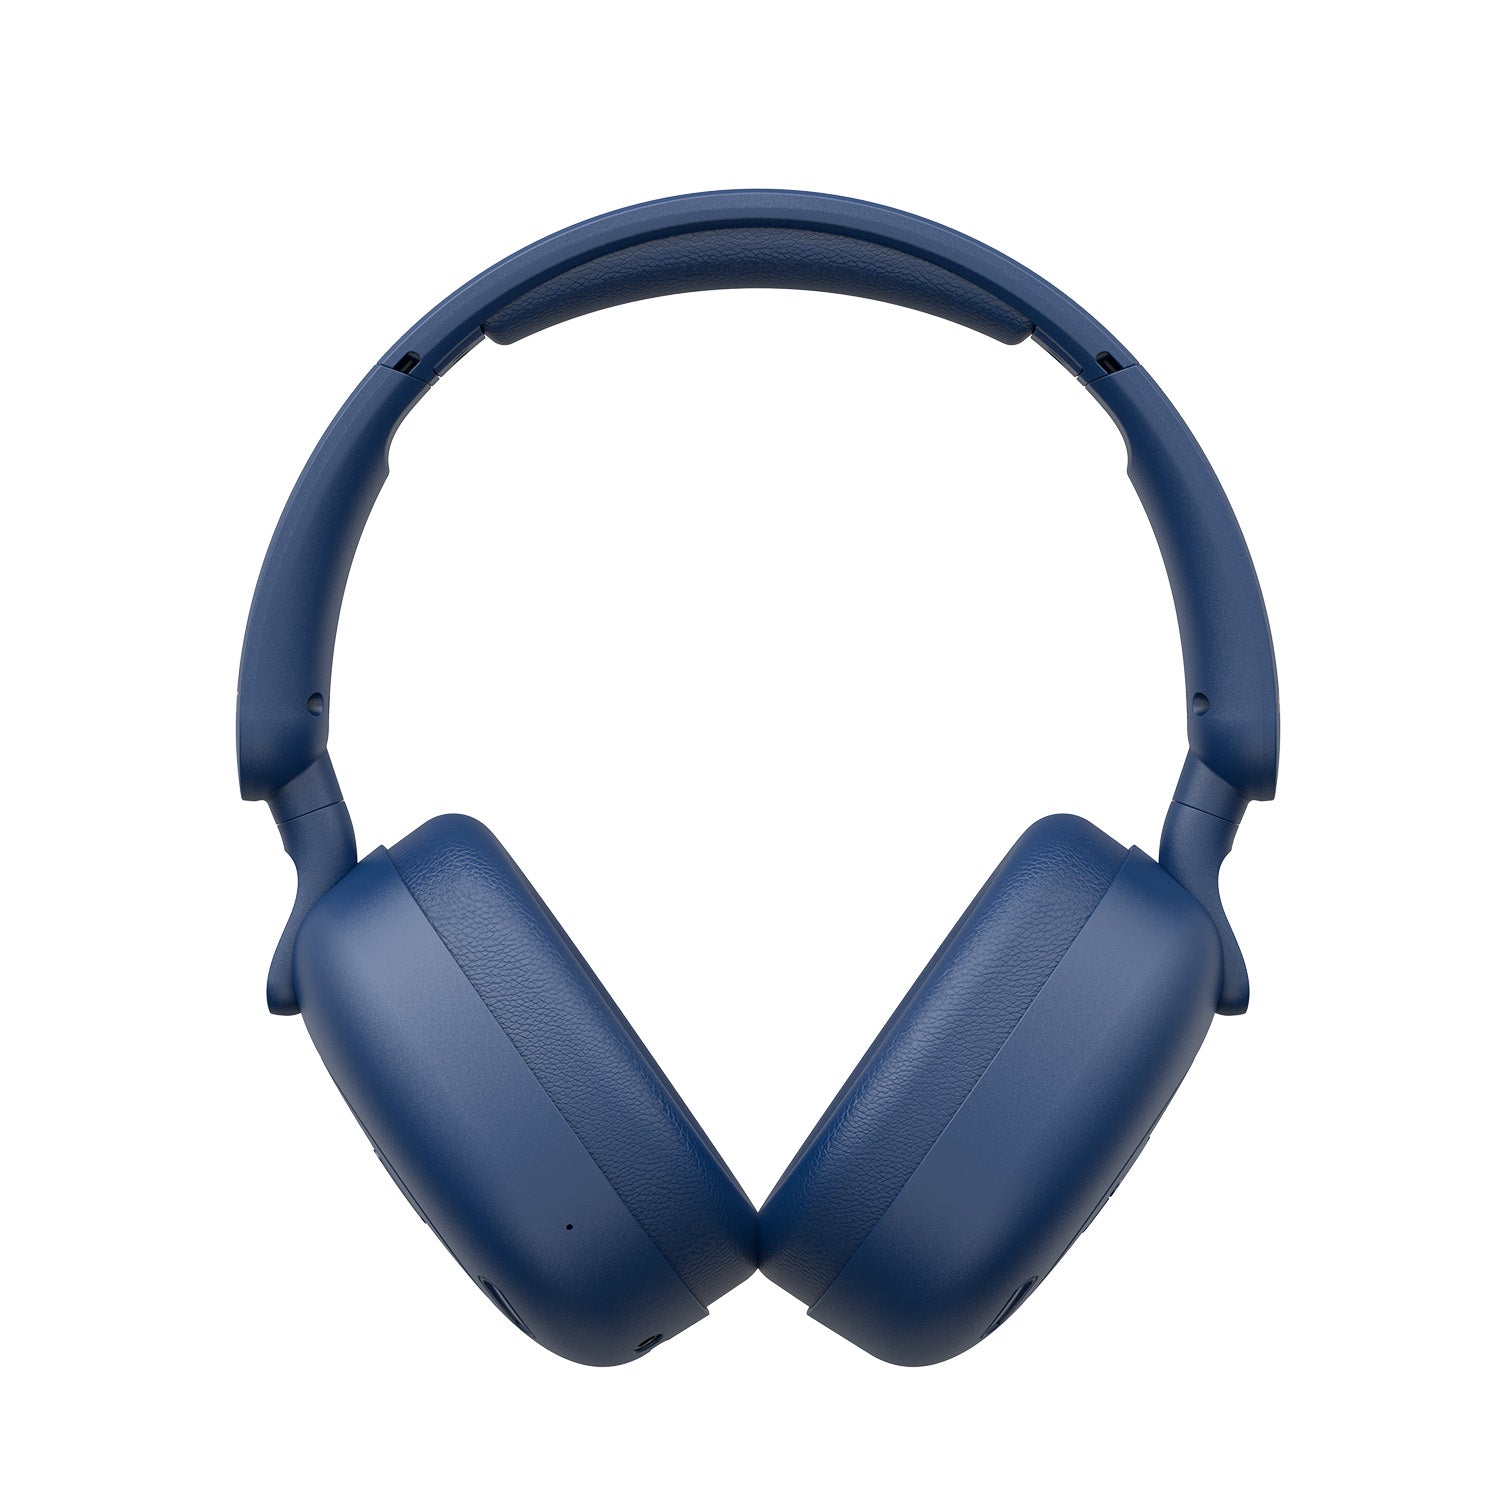 HAVIT H655BT PRO ANC Over-Ear Noise Cancelling Wireless Headset